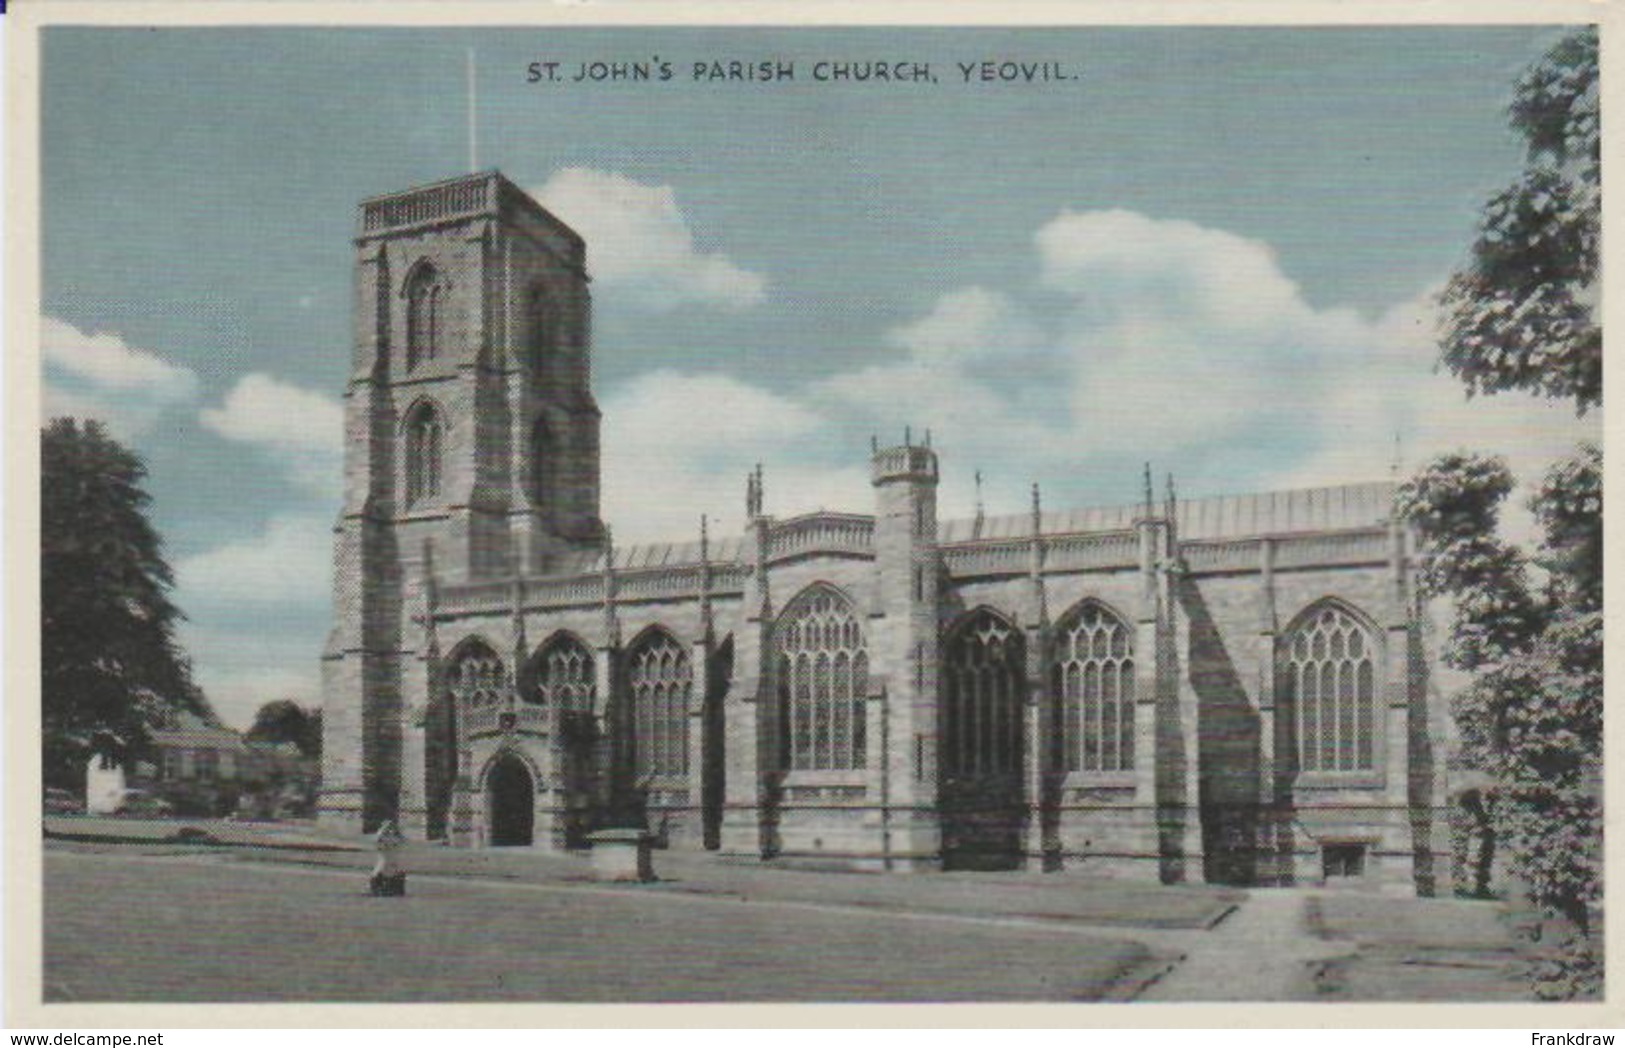 Postcard - St. John's Parish Church, Yeovil, Card No.Y0303 - Unused Very Good - Unclassified